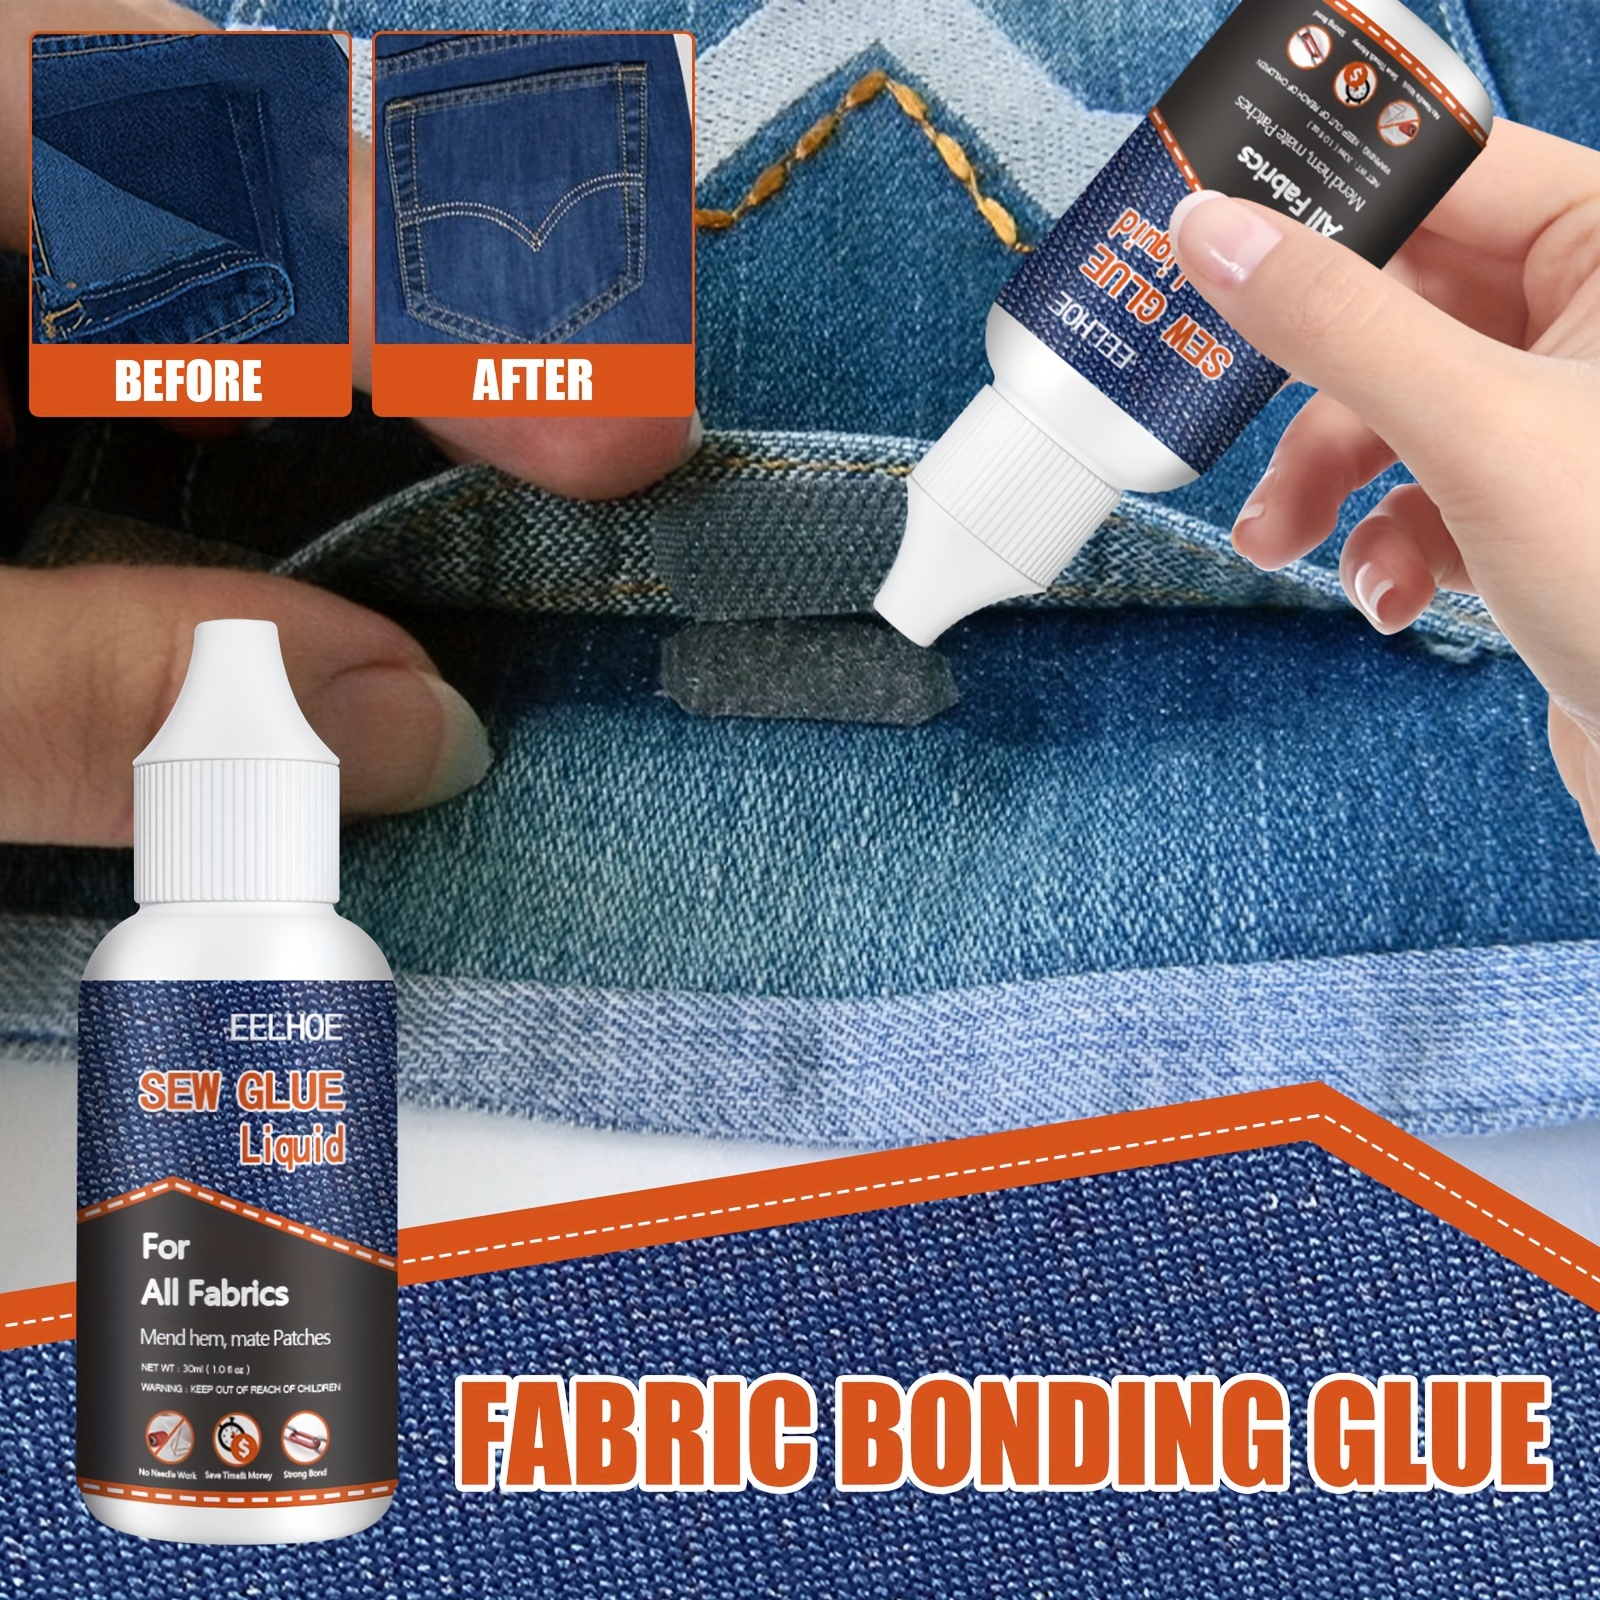 50ml Cloth Glue Universal Adhesive Clothing Repair Printing